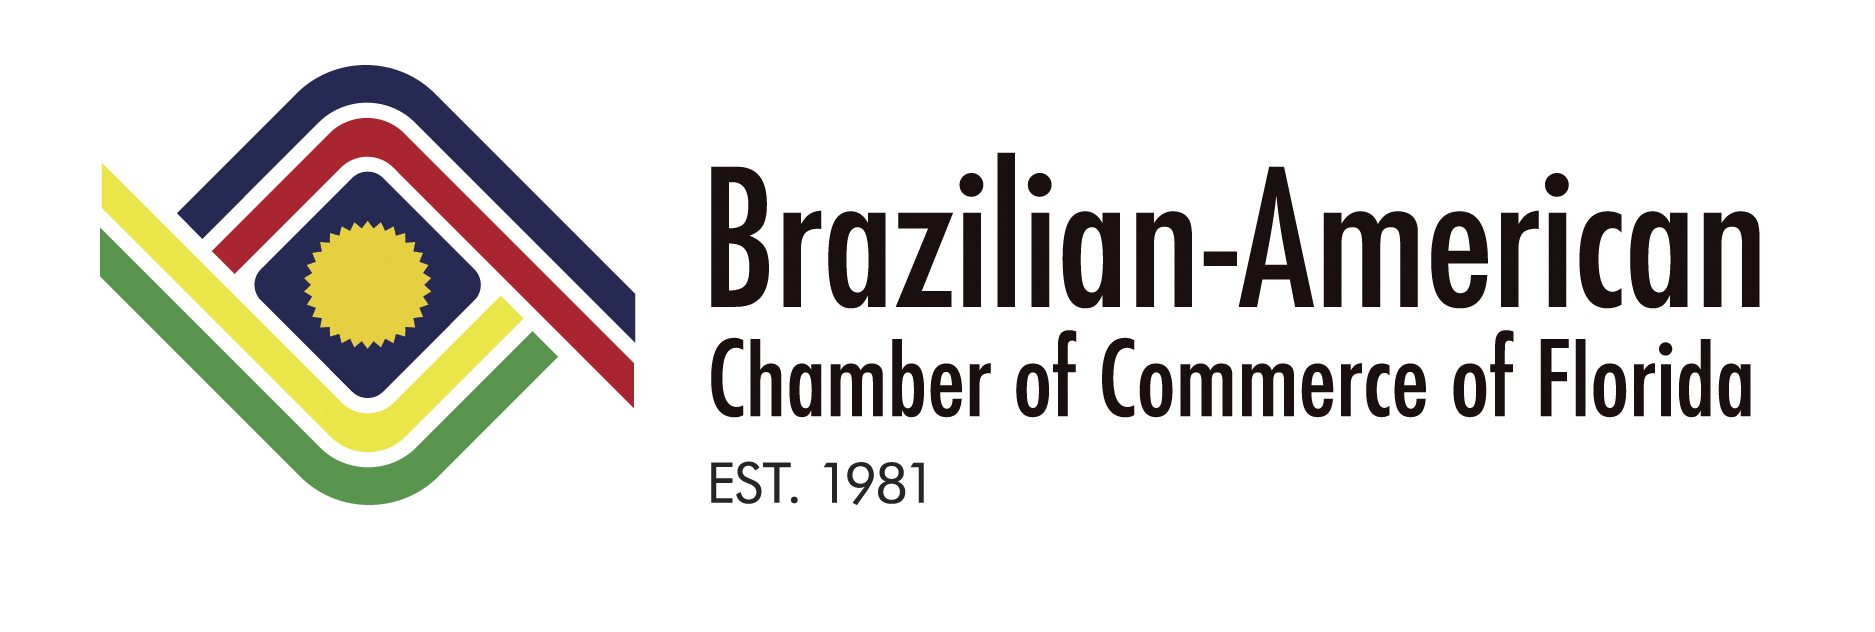 ChamberMember Archives - Brazilian-American Chamber of Commerce